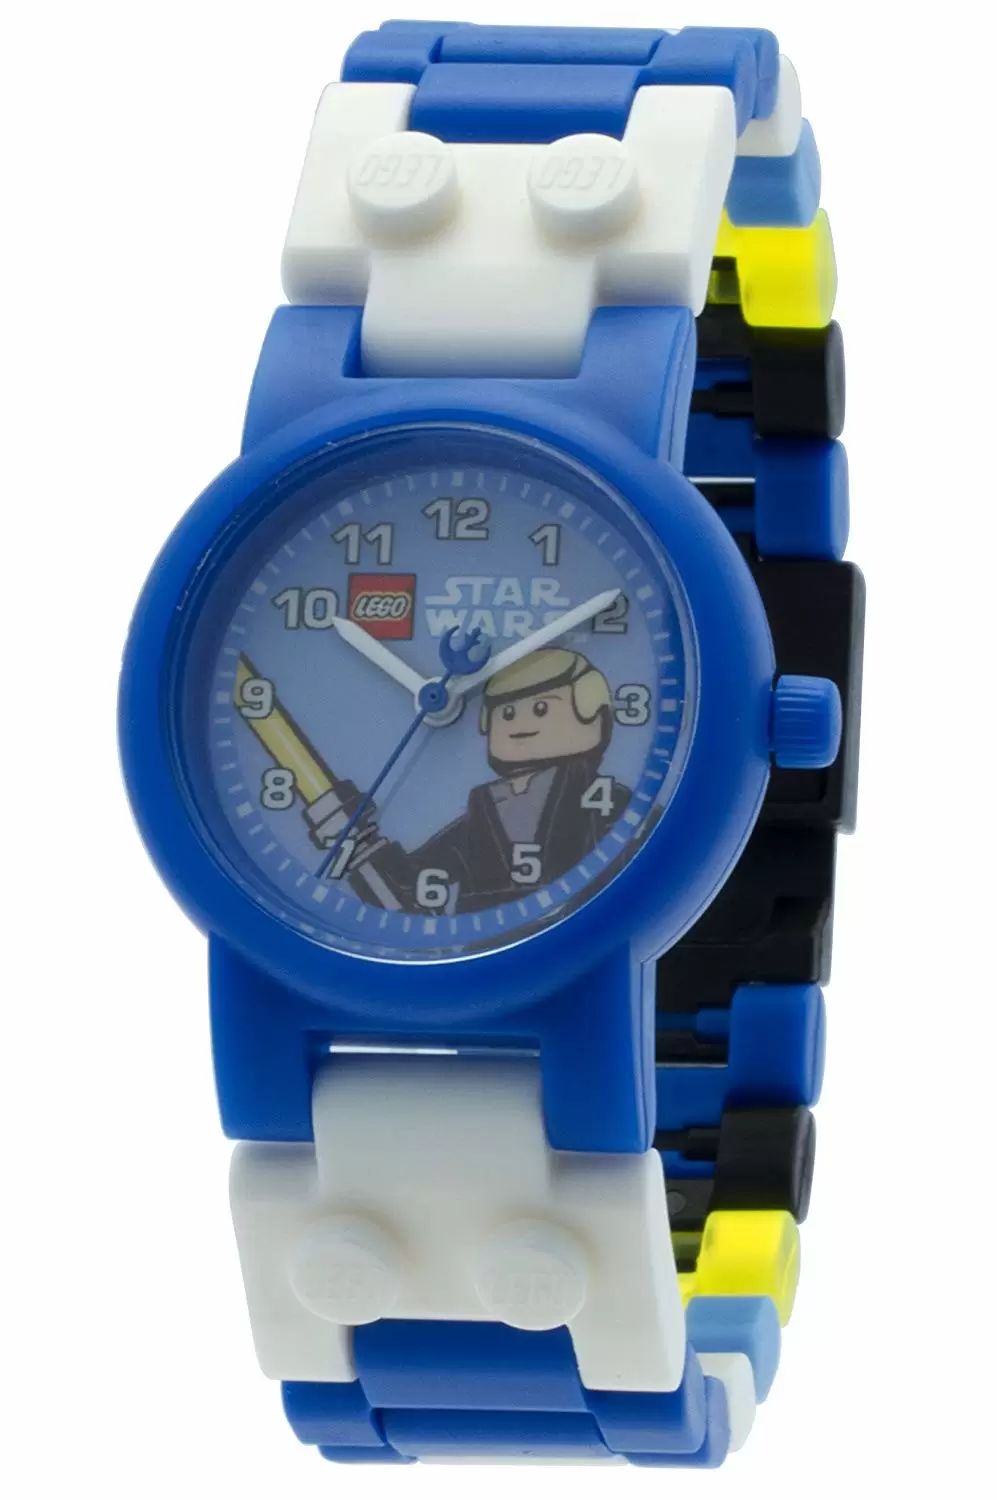 LEGO Watches - LEGO Star Wars Luke Skywalker Watch